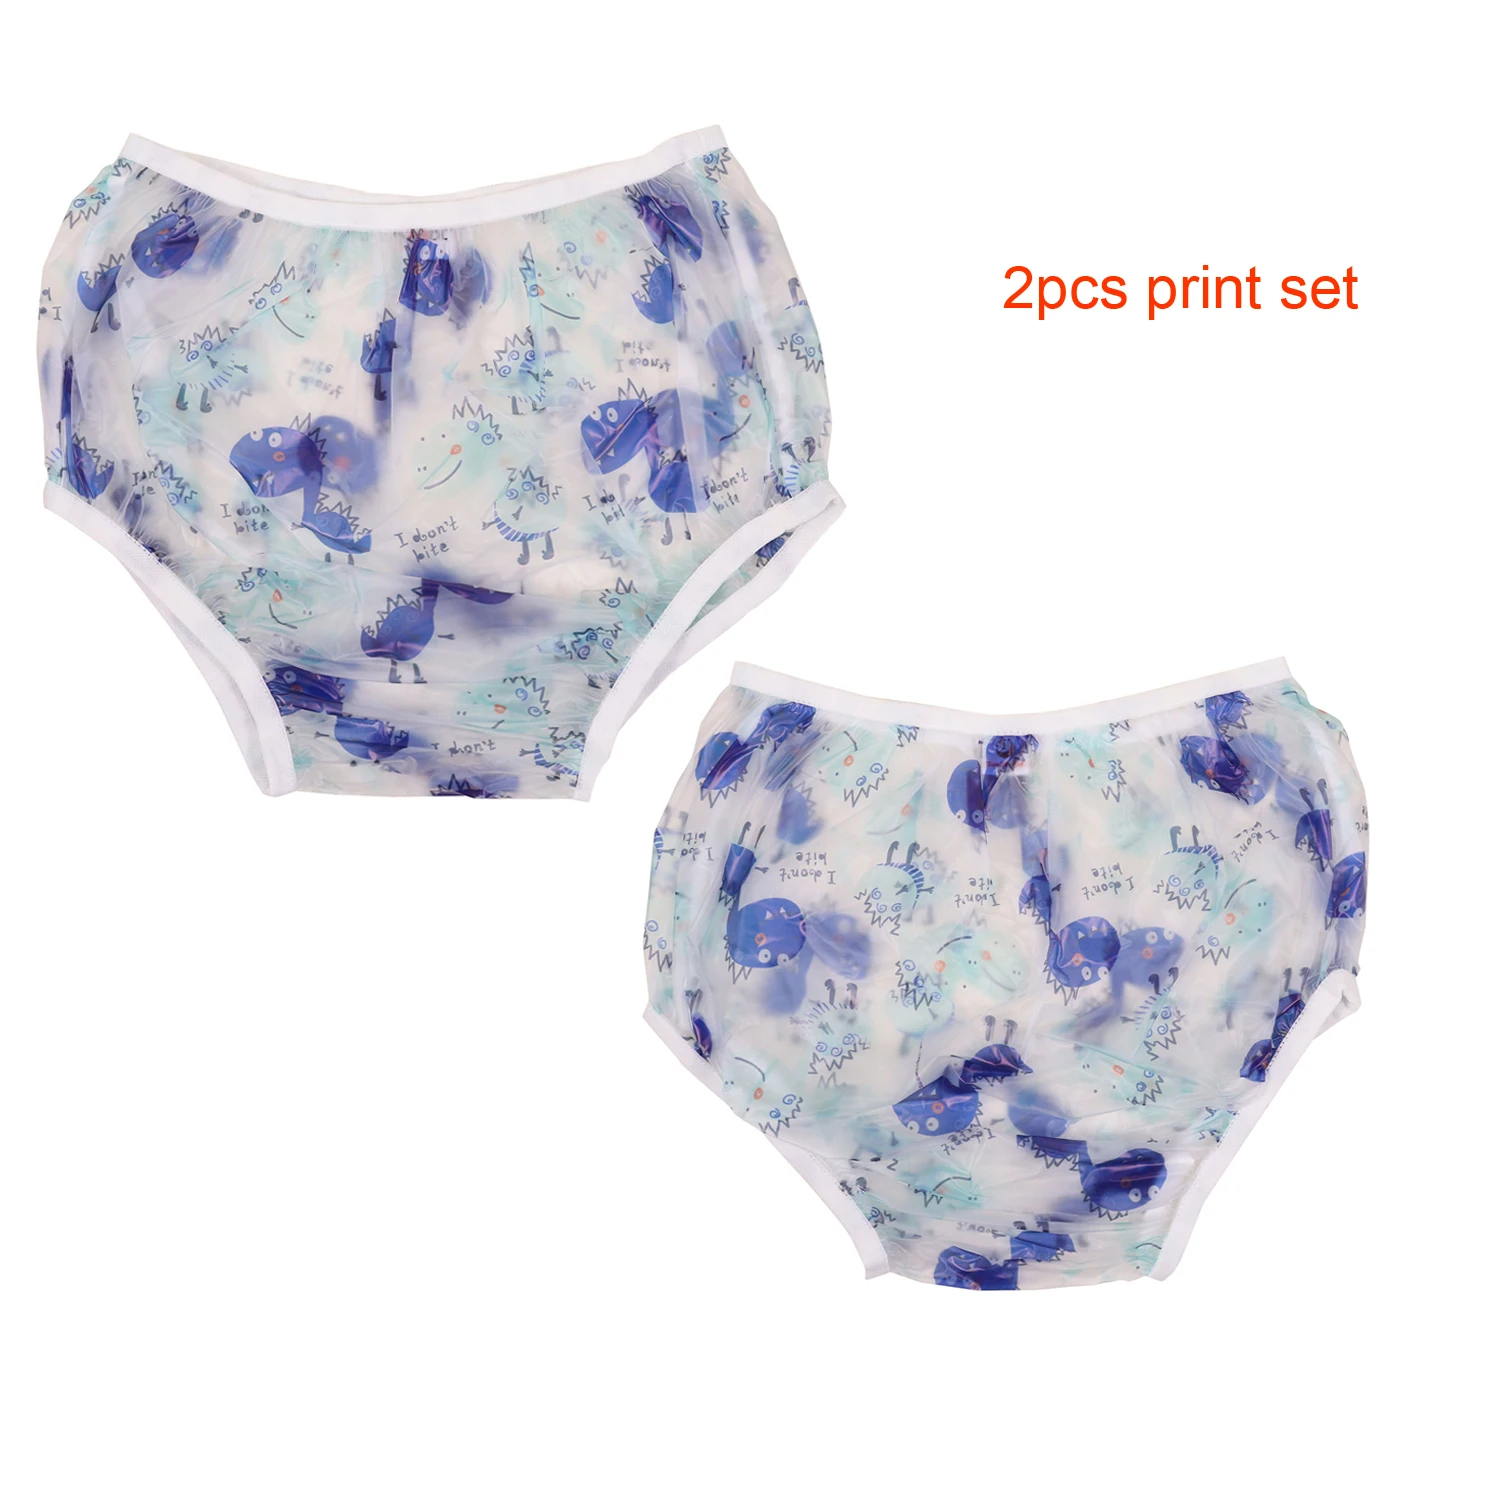 New print 2pcs Set Adult Baby Waterproof Pants- ABDL PVC Diaper Incontinence Pull-on PVCPlastic Pants